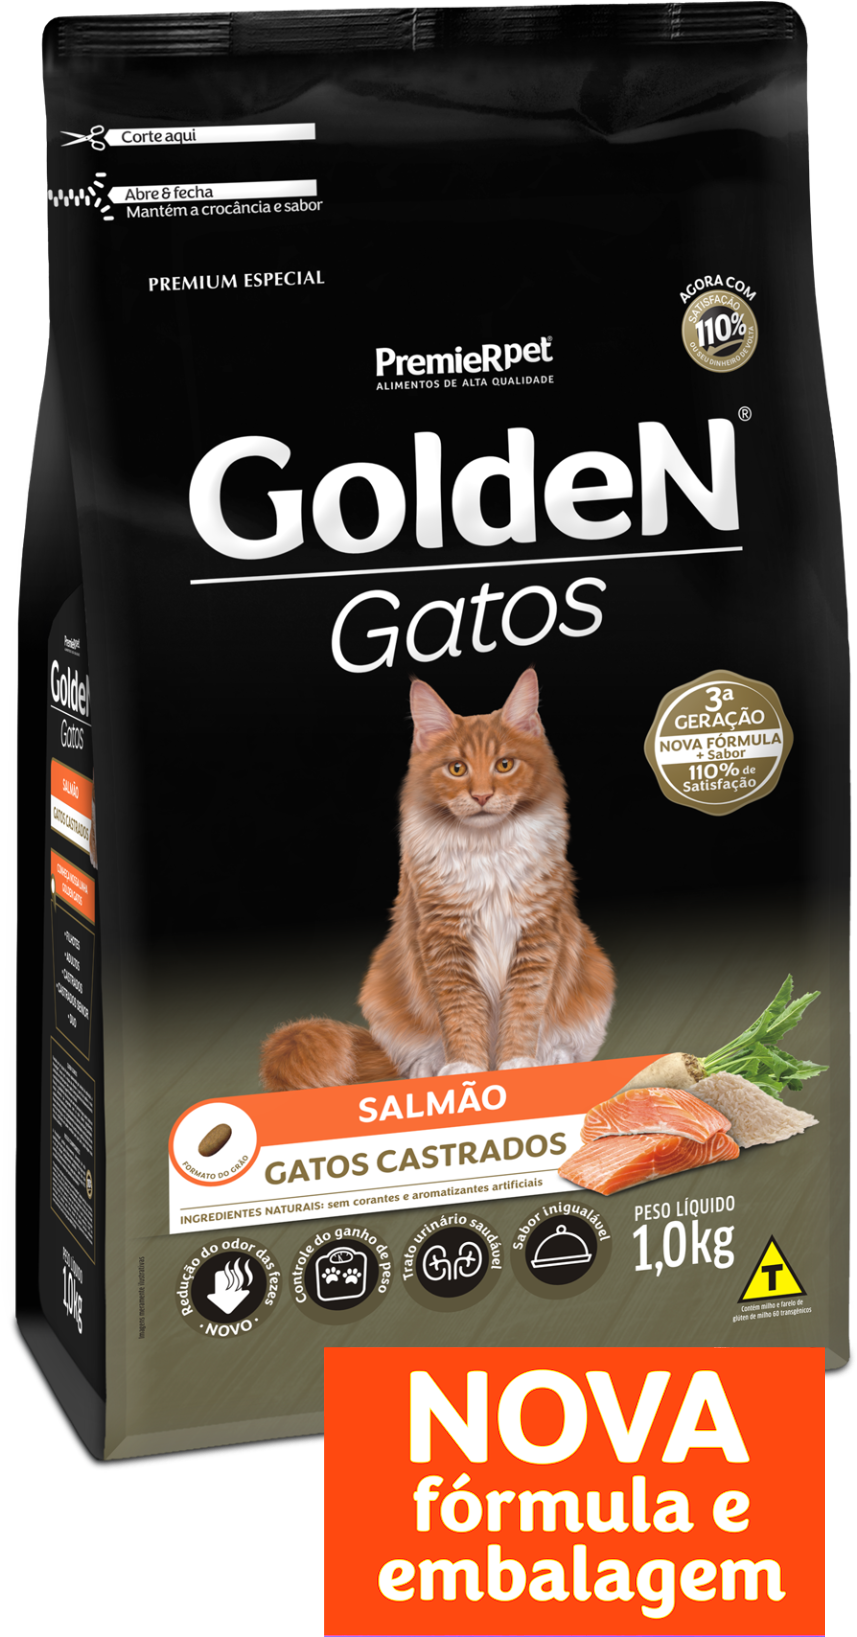 Golden Gatos Cat Food Package Salmon Flavor PNG image